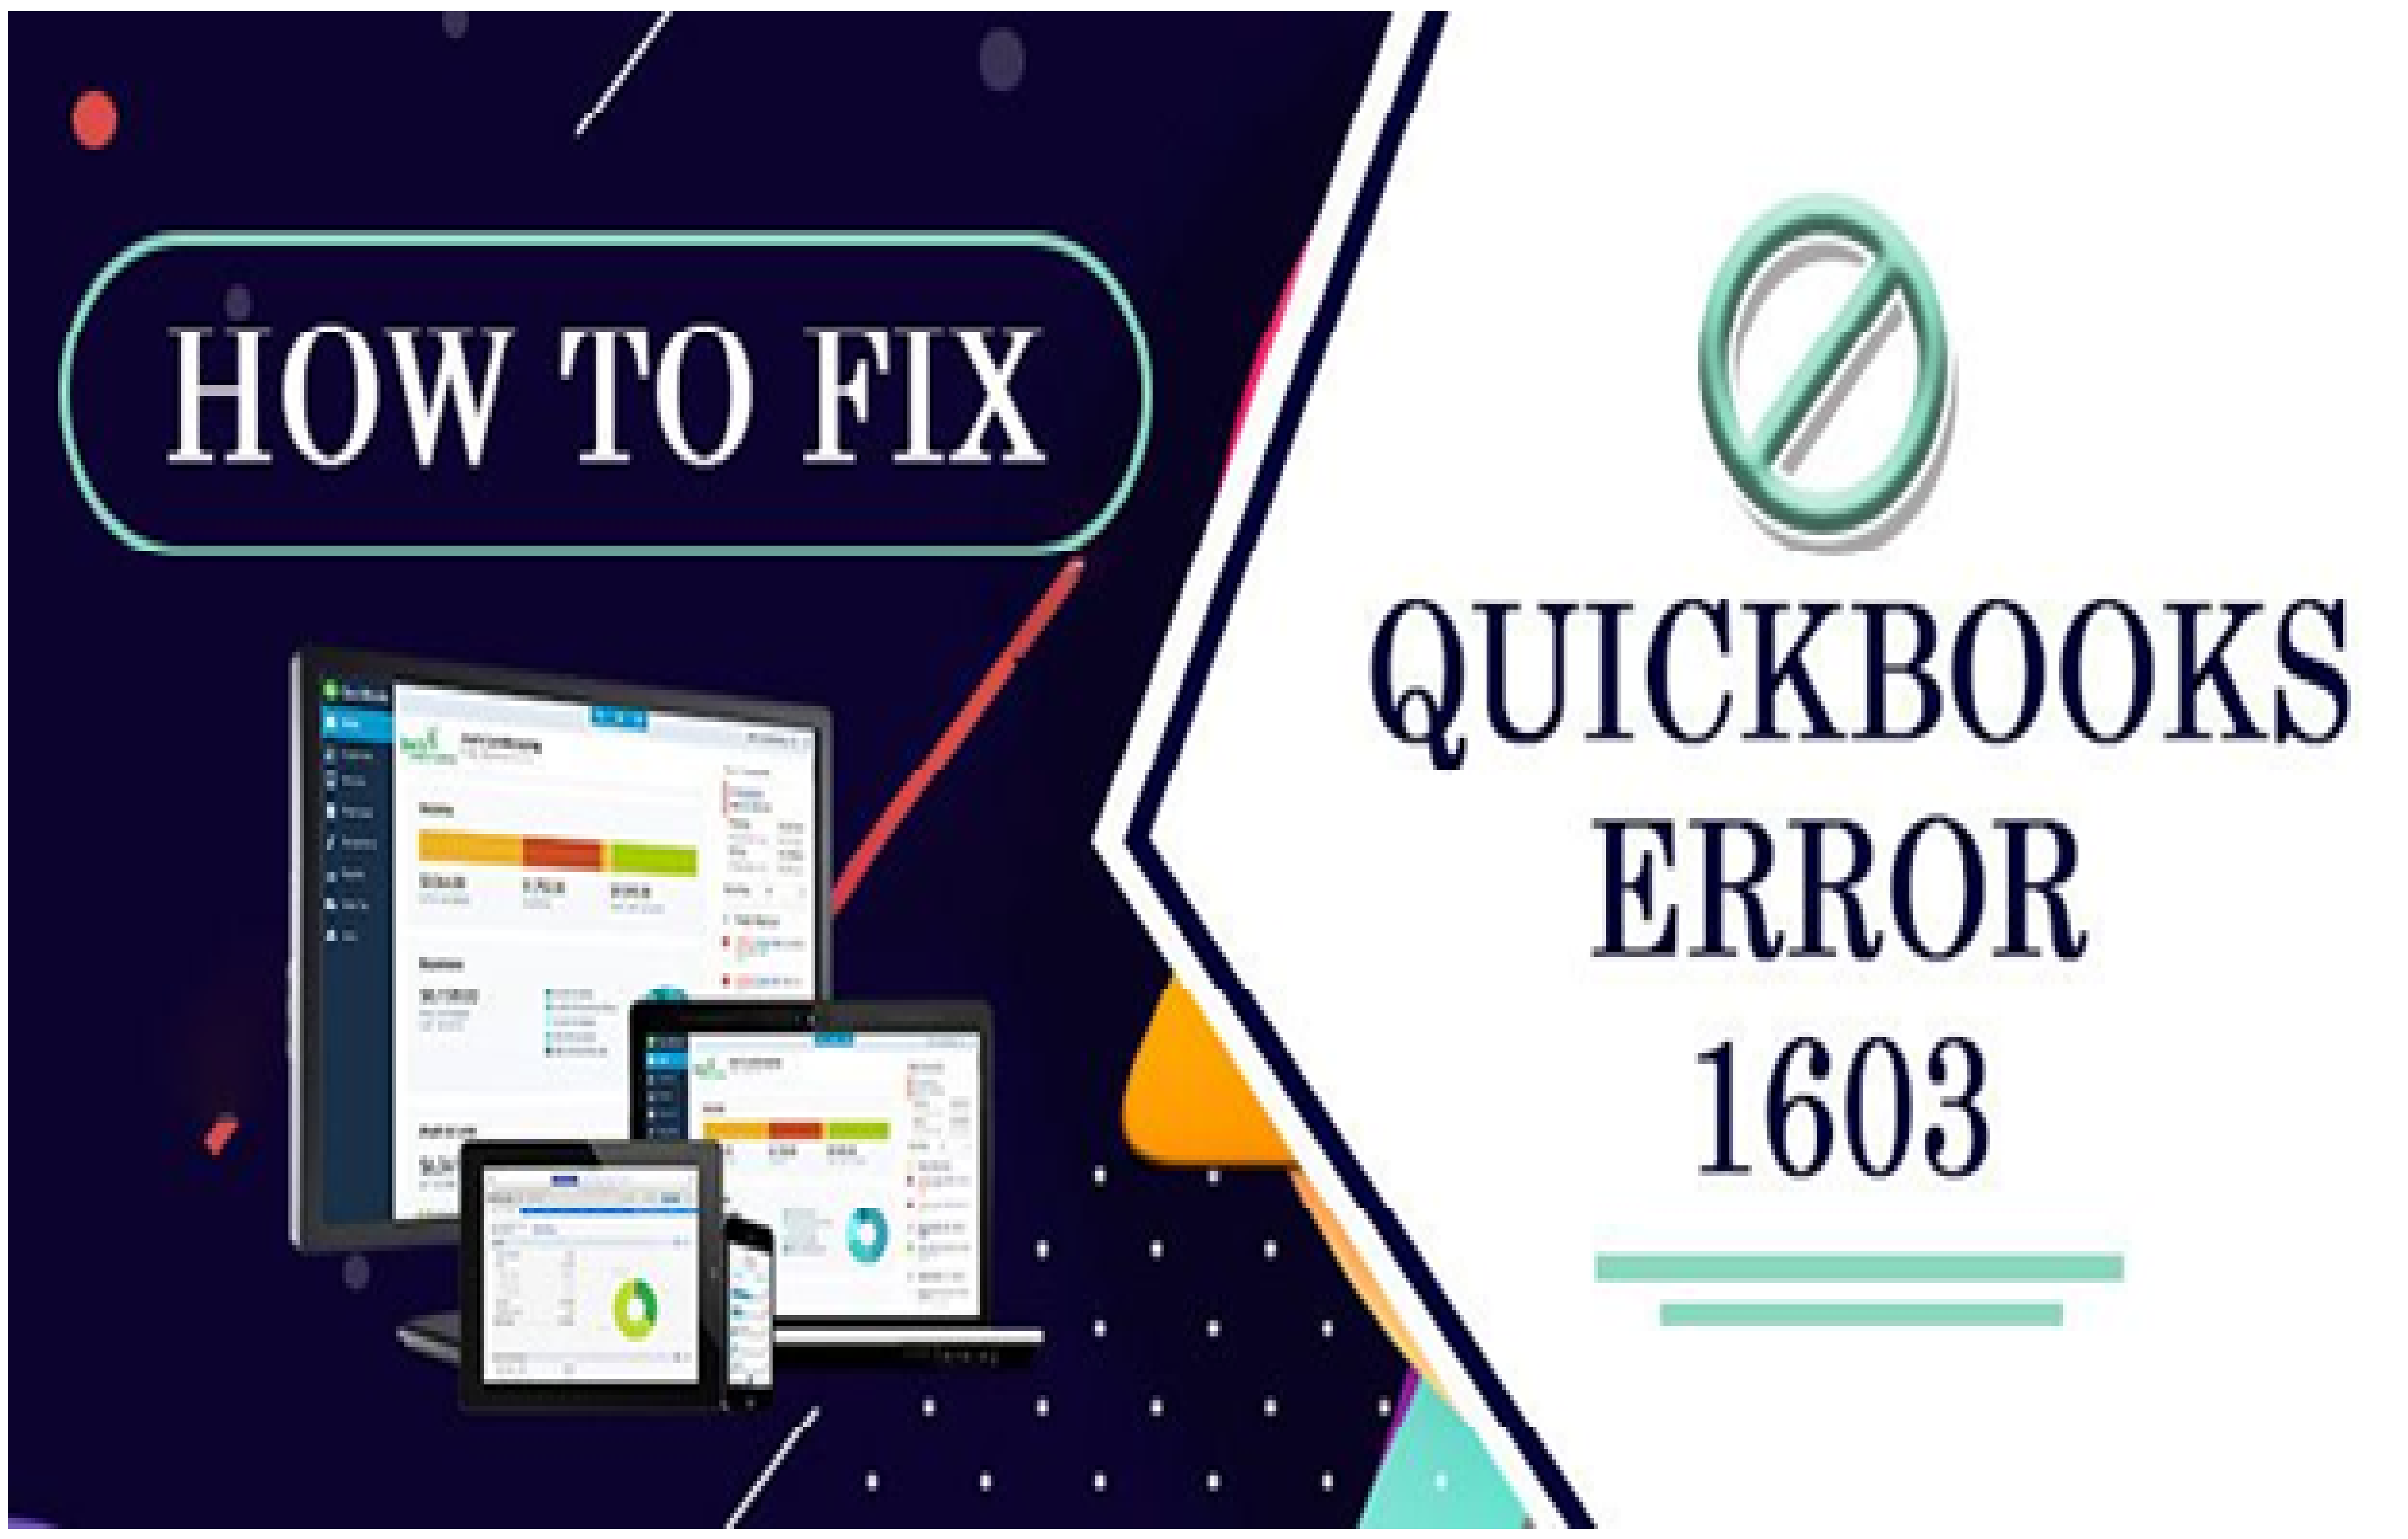 QuickBooks Error 1603: Easy Solutions To Fix